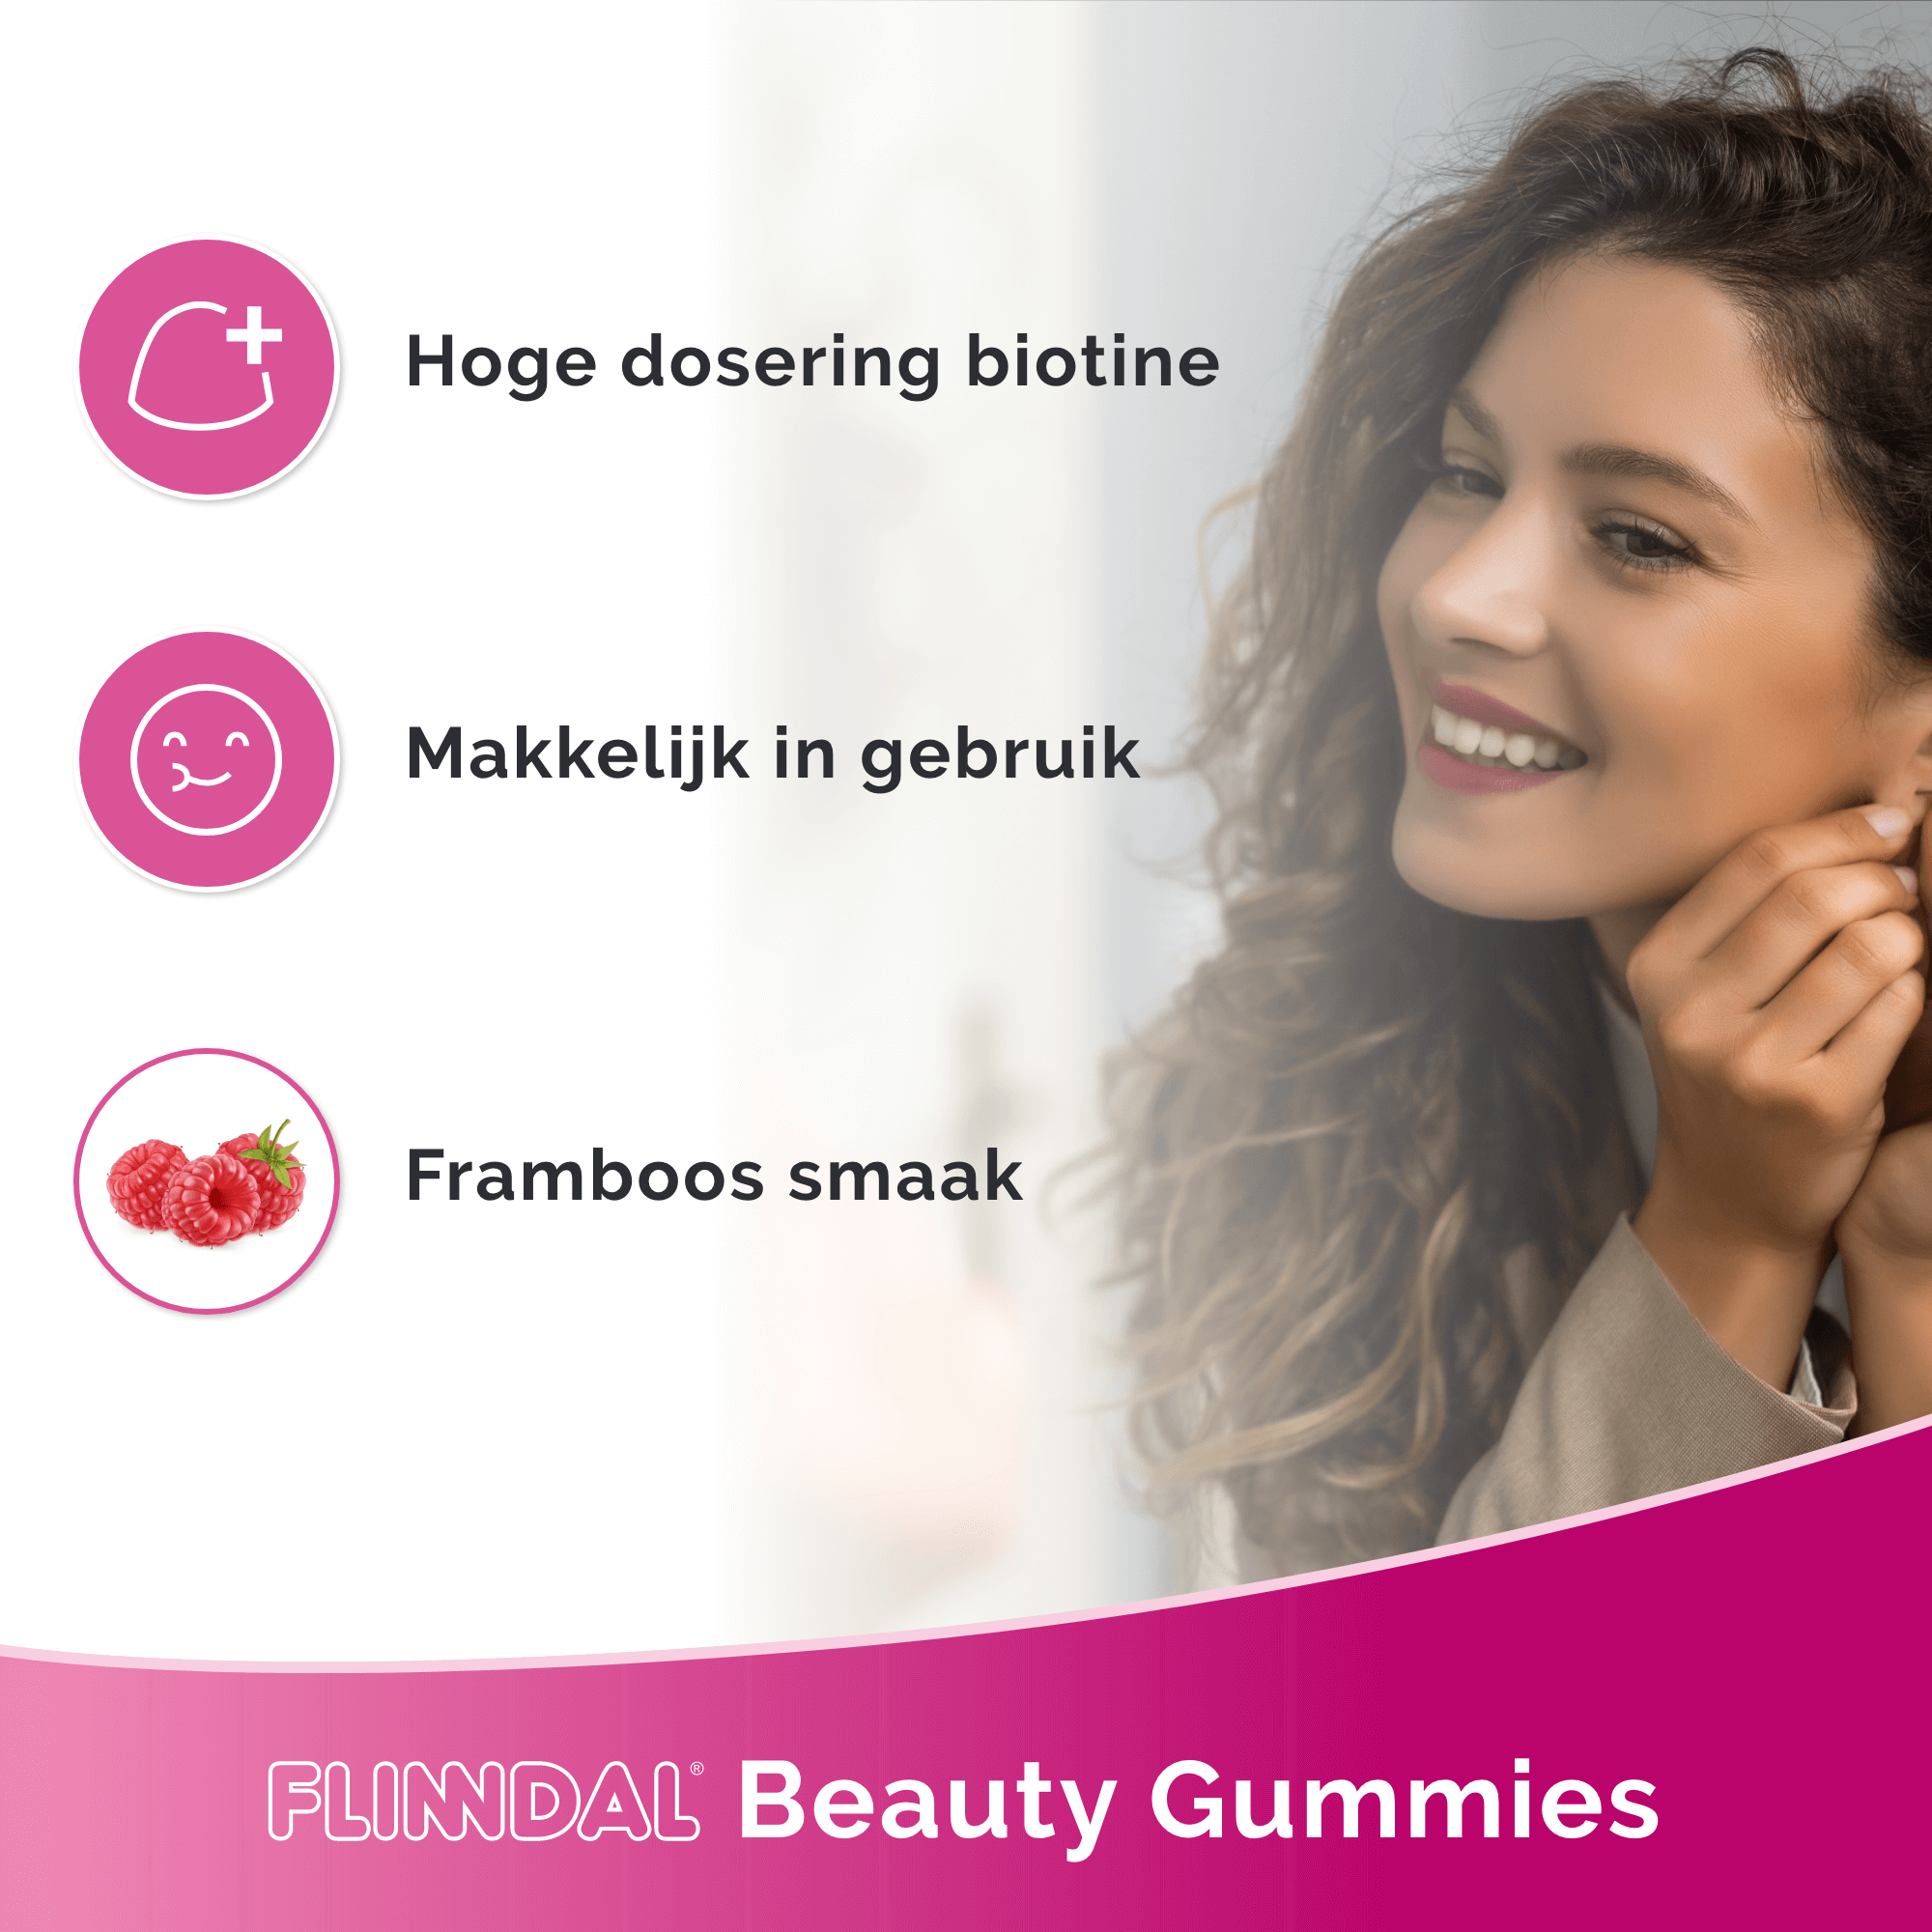 Flinndal Beauty Gummies voordelen